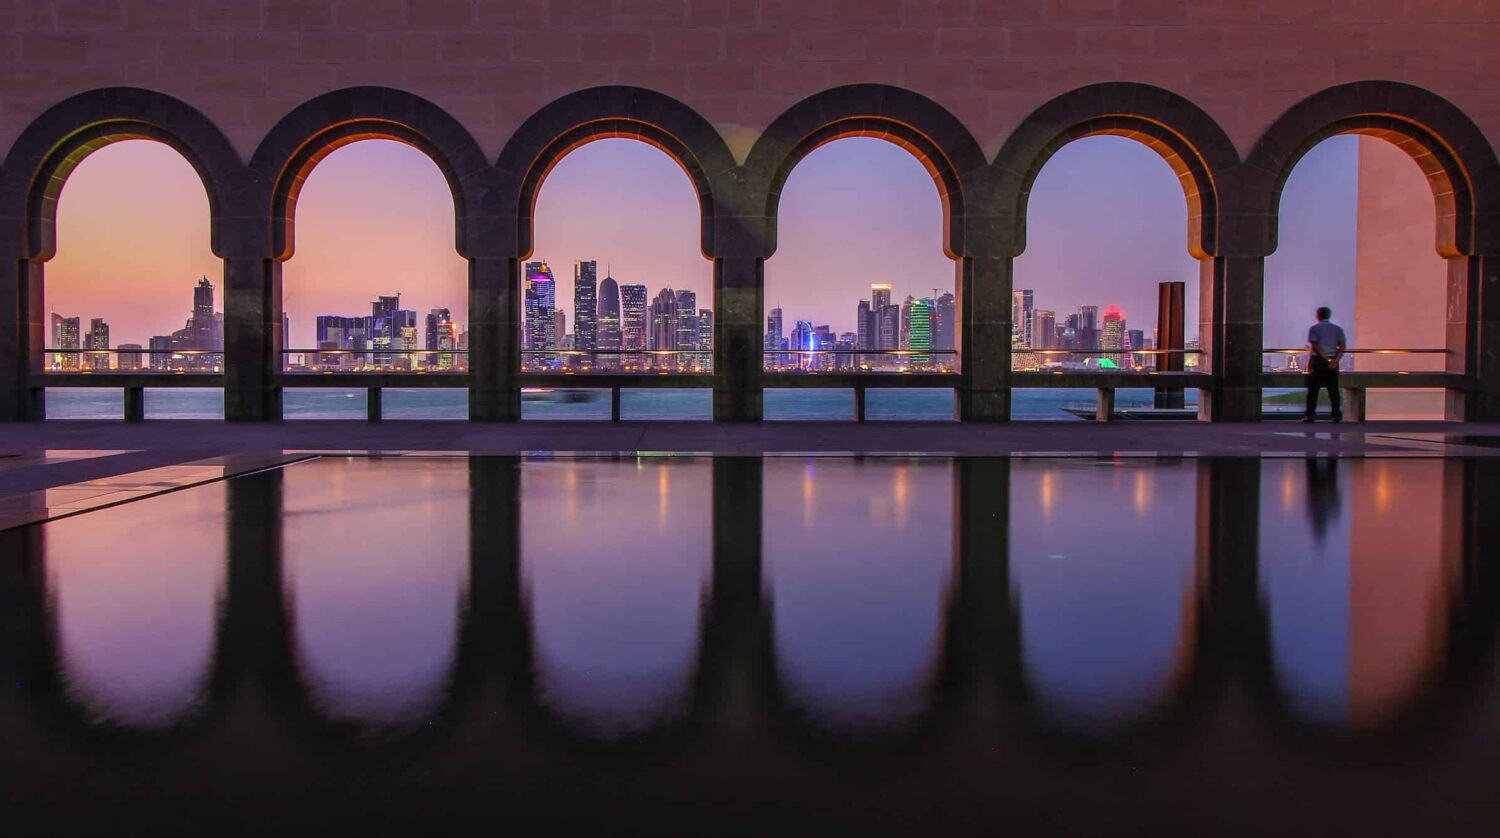 vista do museu de arte islâmica na capital doha no qatar